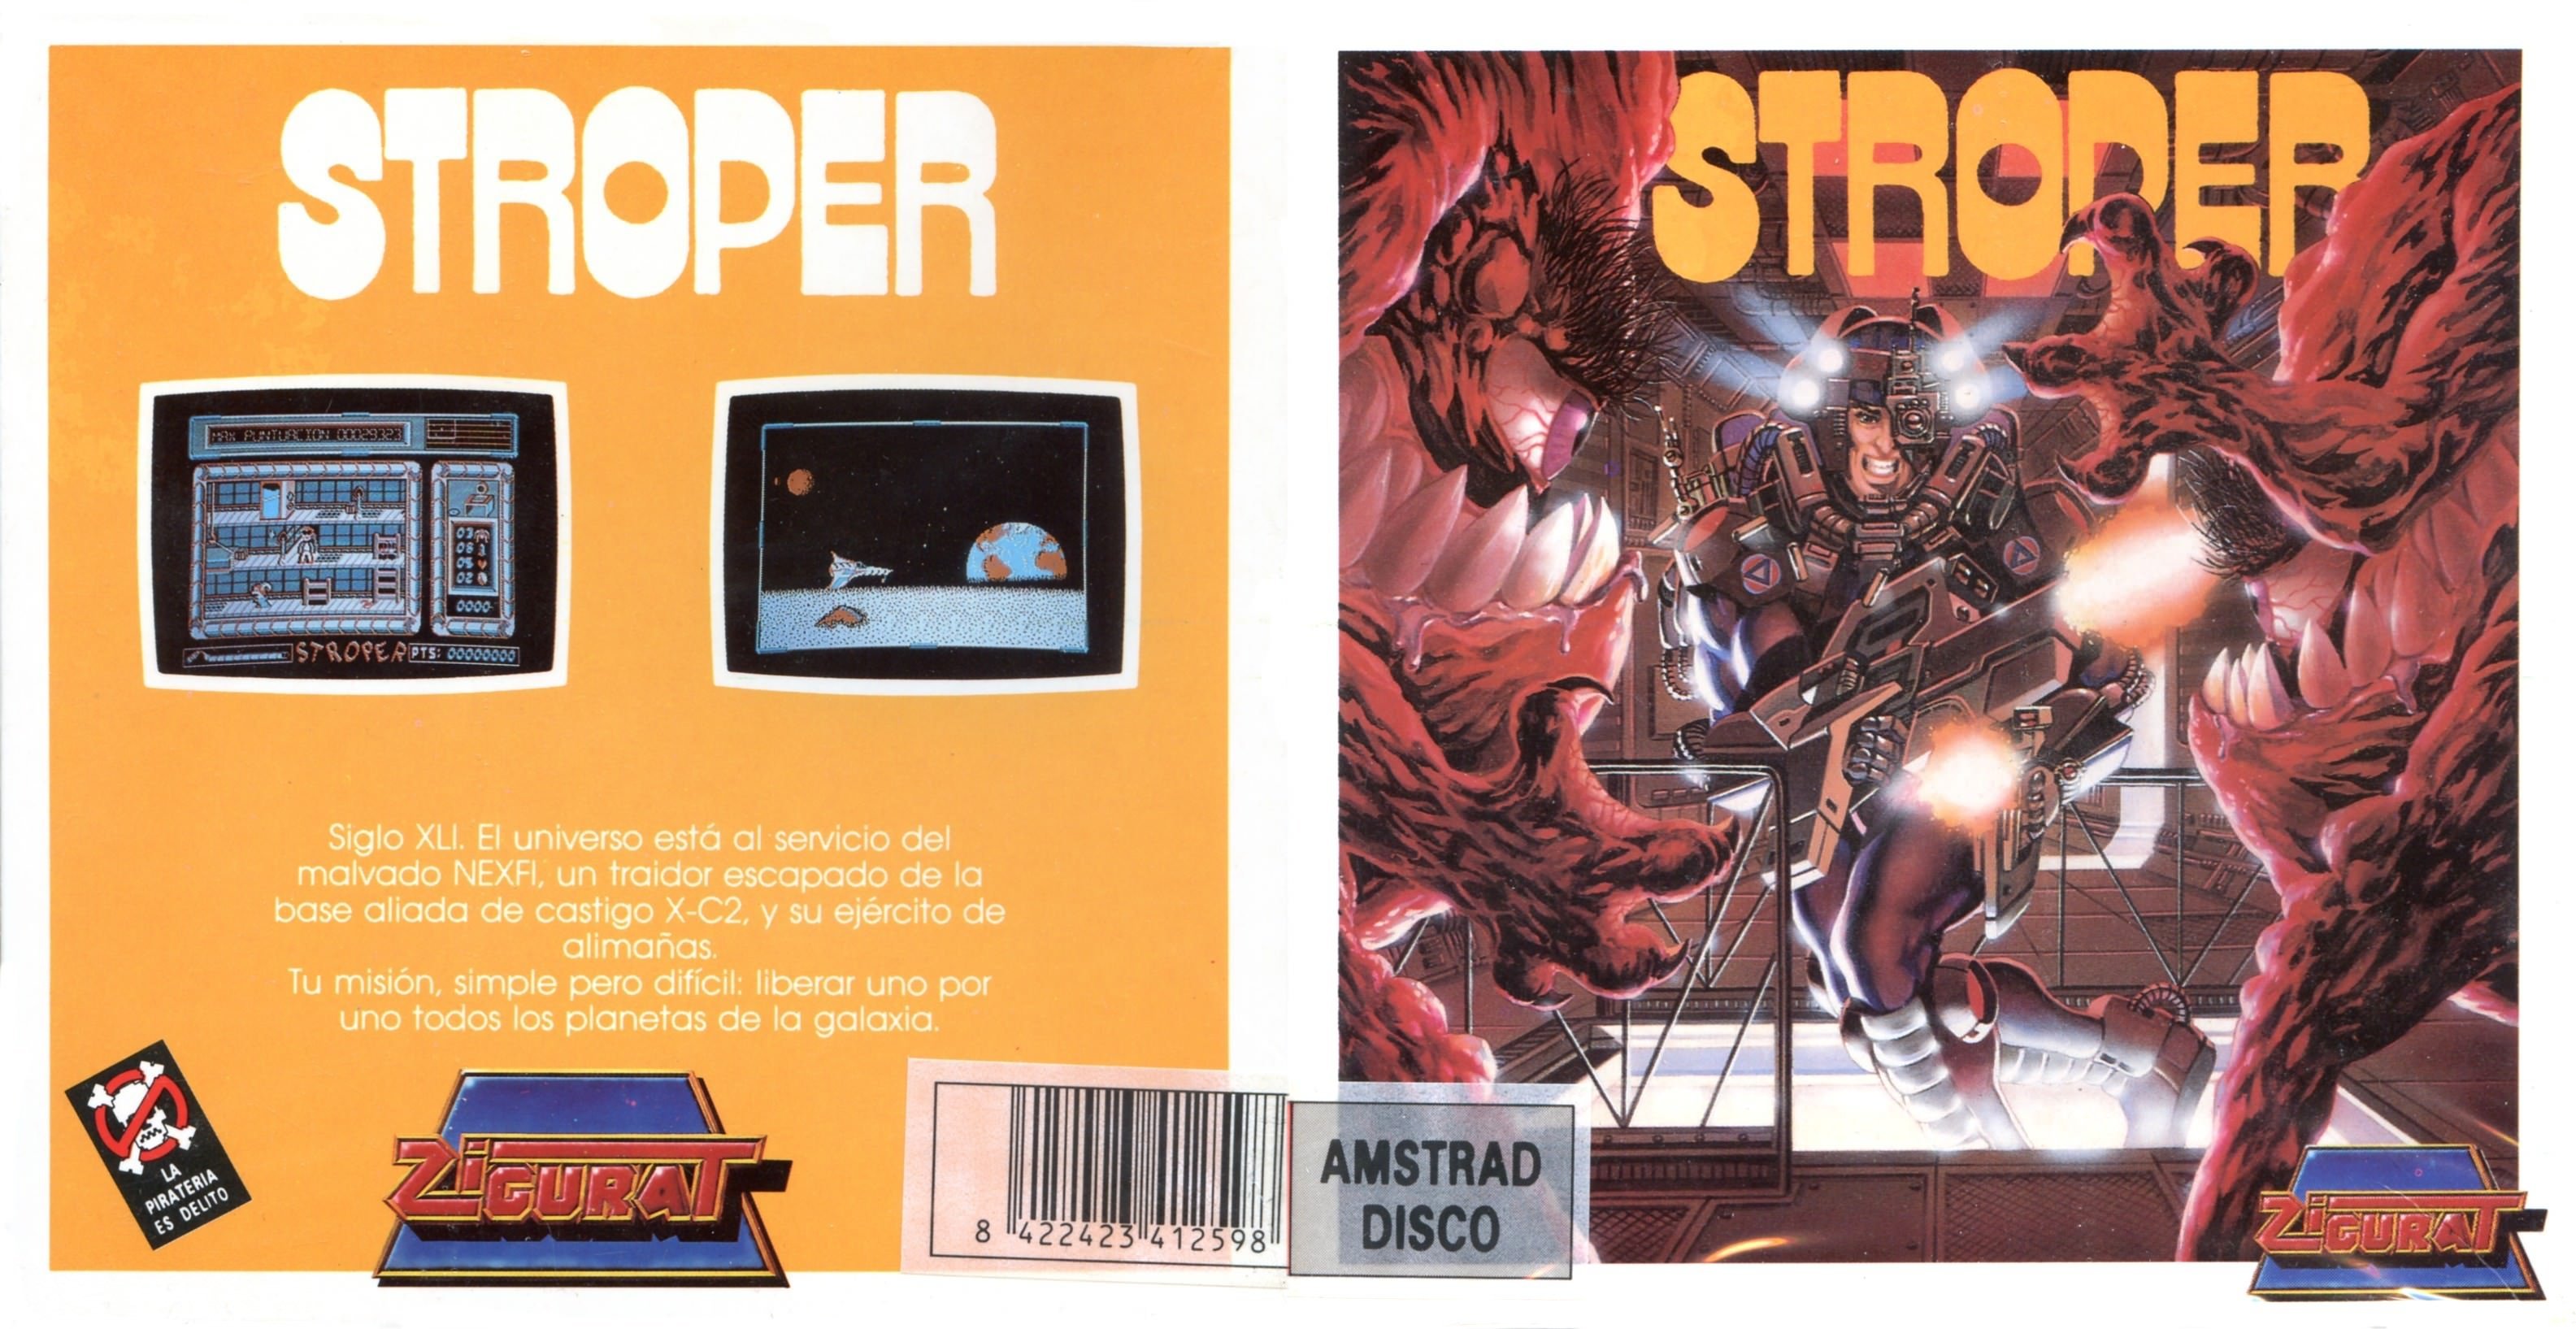 Caratula de Stroper para Amstrad CPC